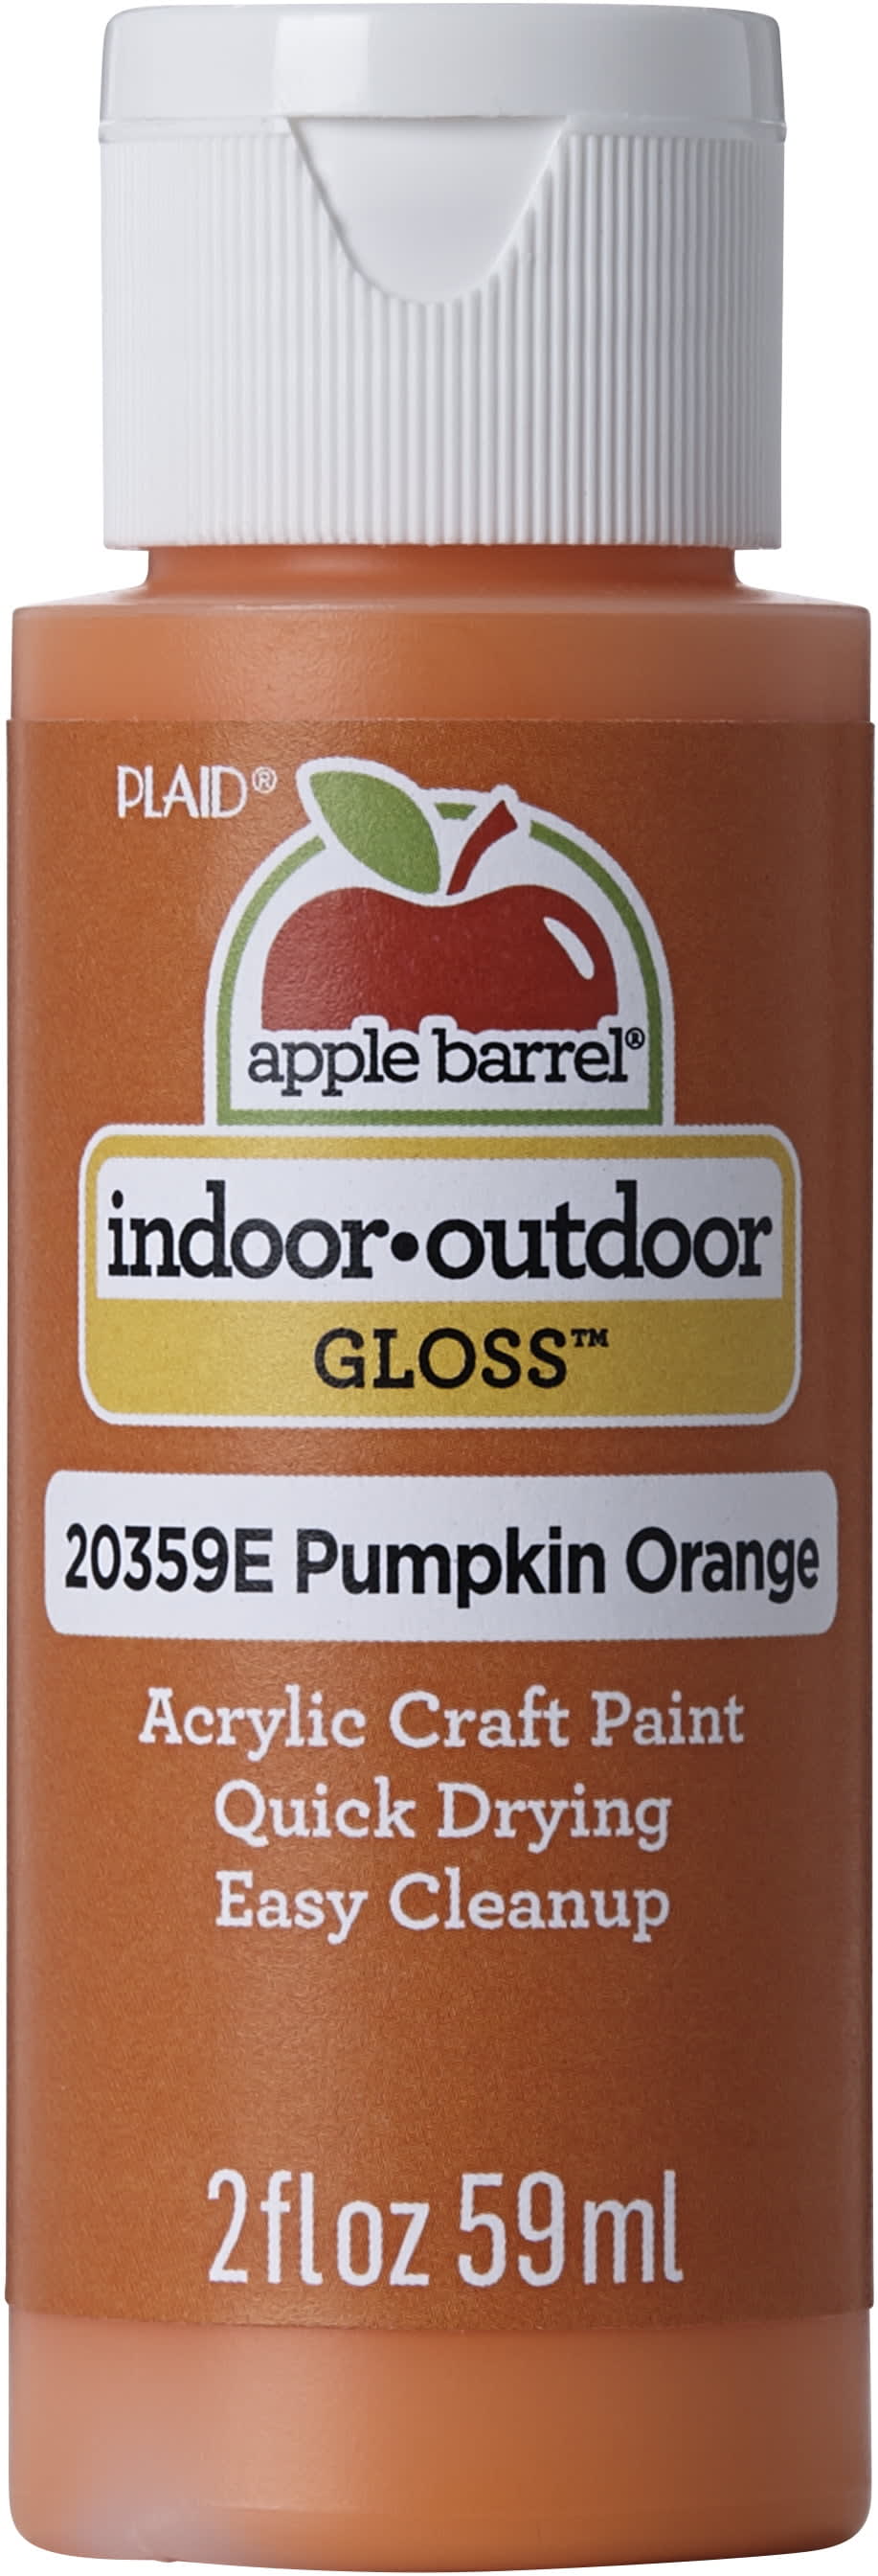 Plaid Apple Barrel Acrylic Craft Paint, Black - 2 fl oz bottle